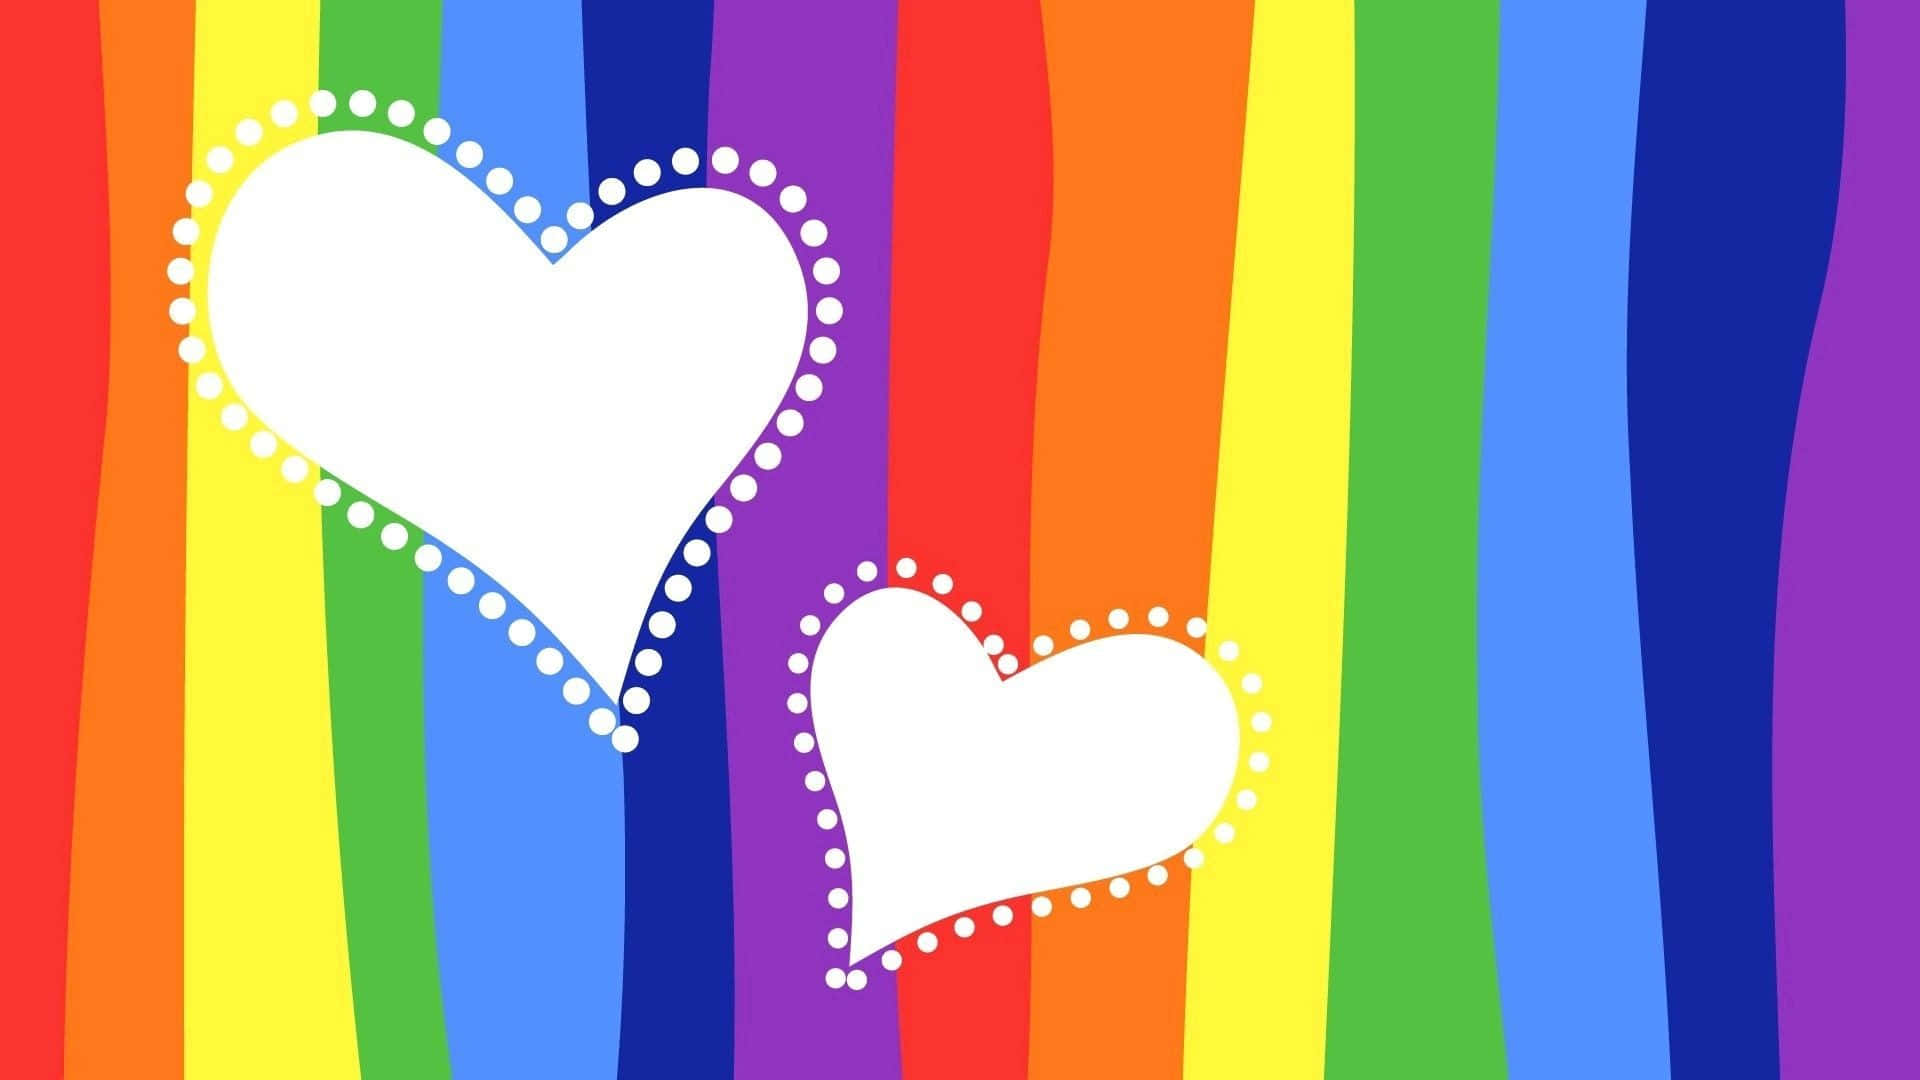 Spread Love&Joy With A Rainbow Heart Wallpaper